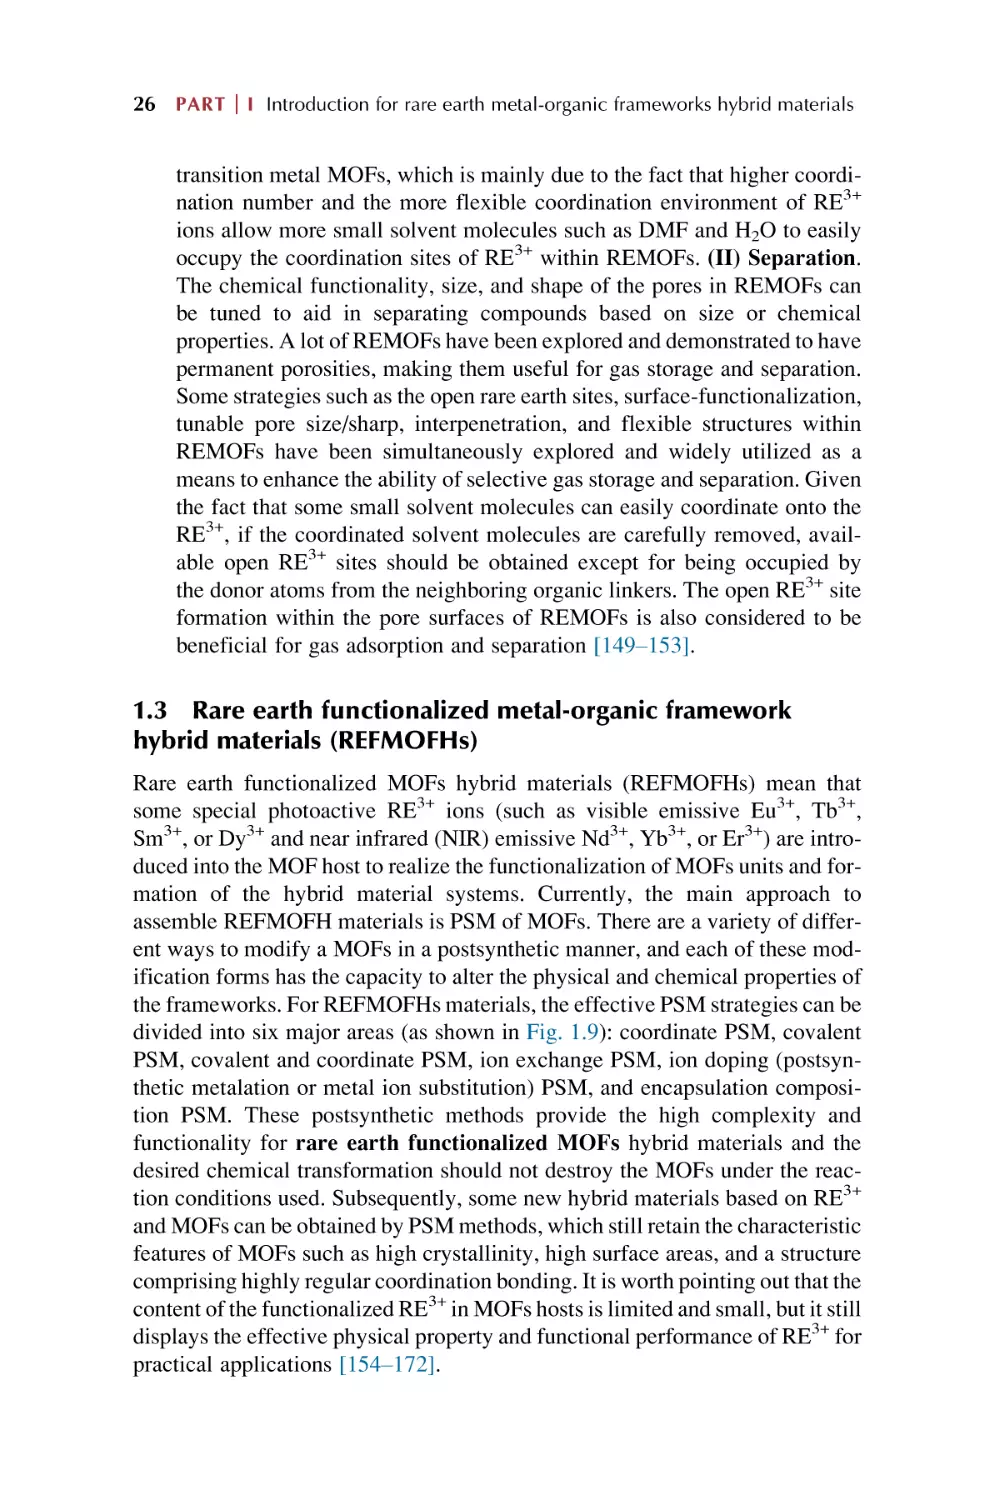 1.3. Rare earth functionalized metal-organic framework hybrid materials (REFMOFHs)